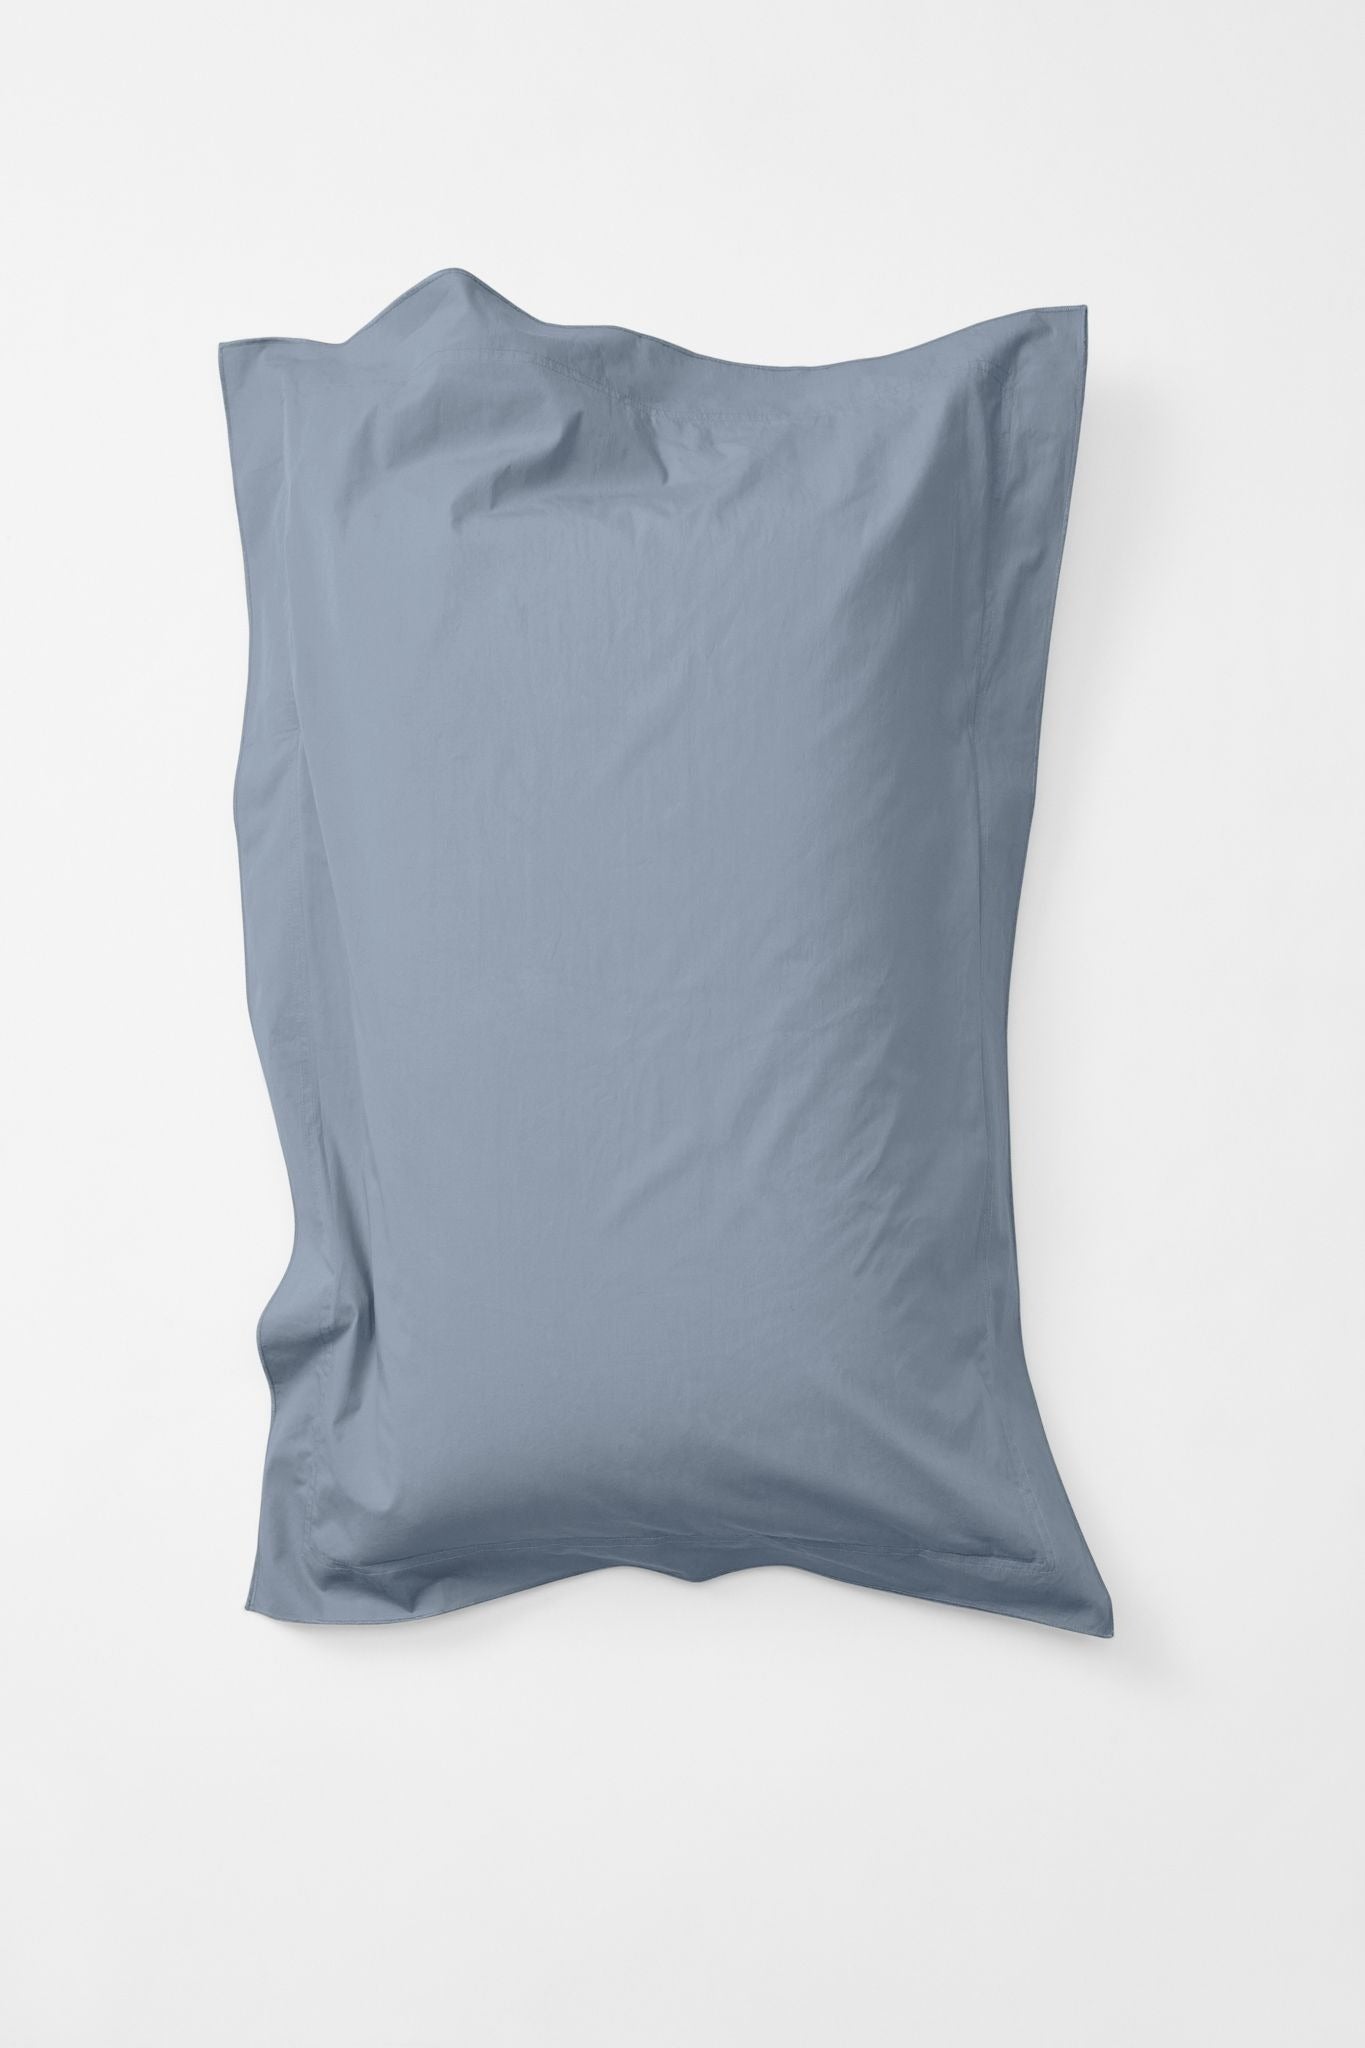 Mono Organic Cotton Percale Pillow Pair - Half Blue Pillows in Standard Pillow